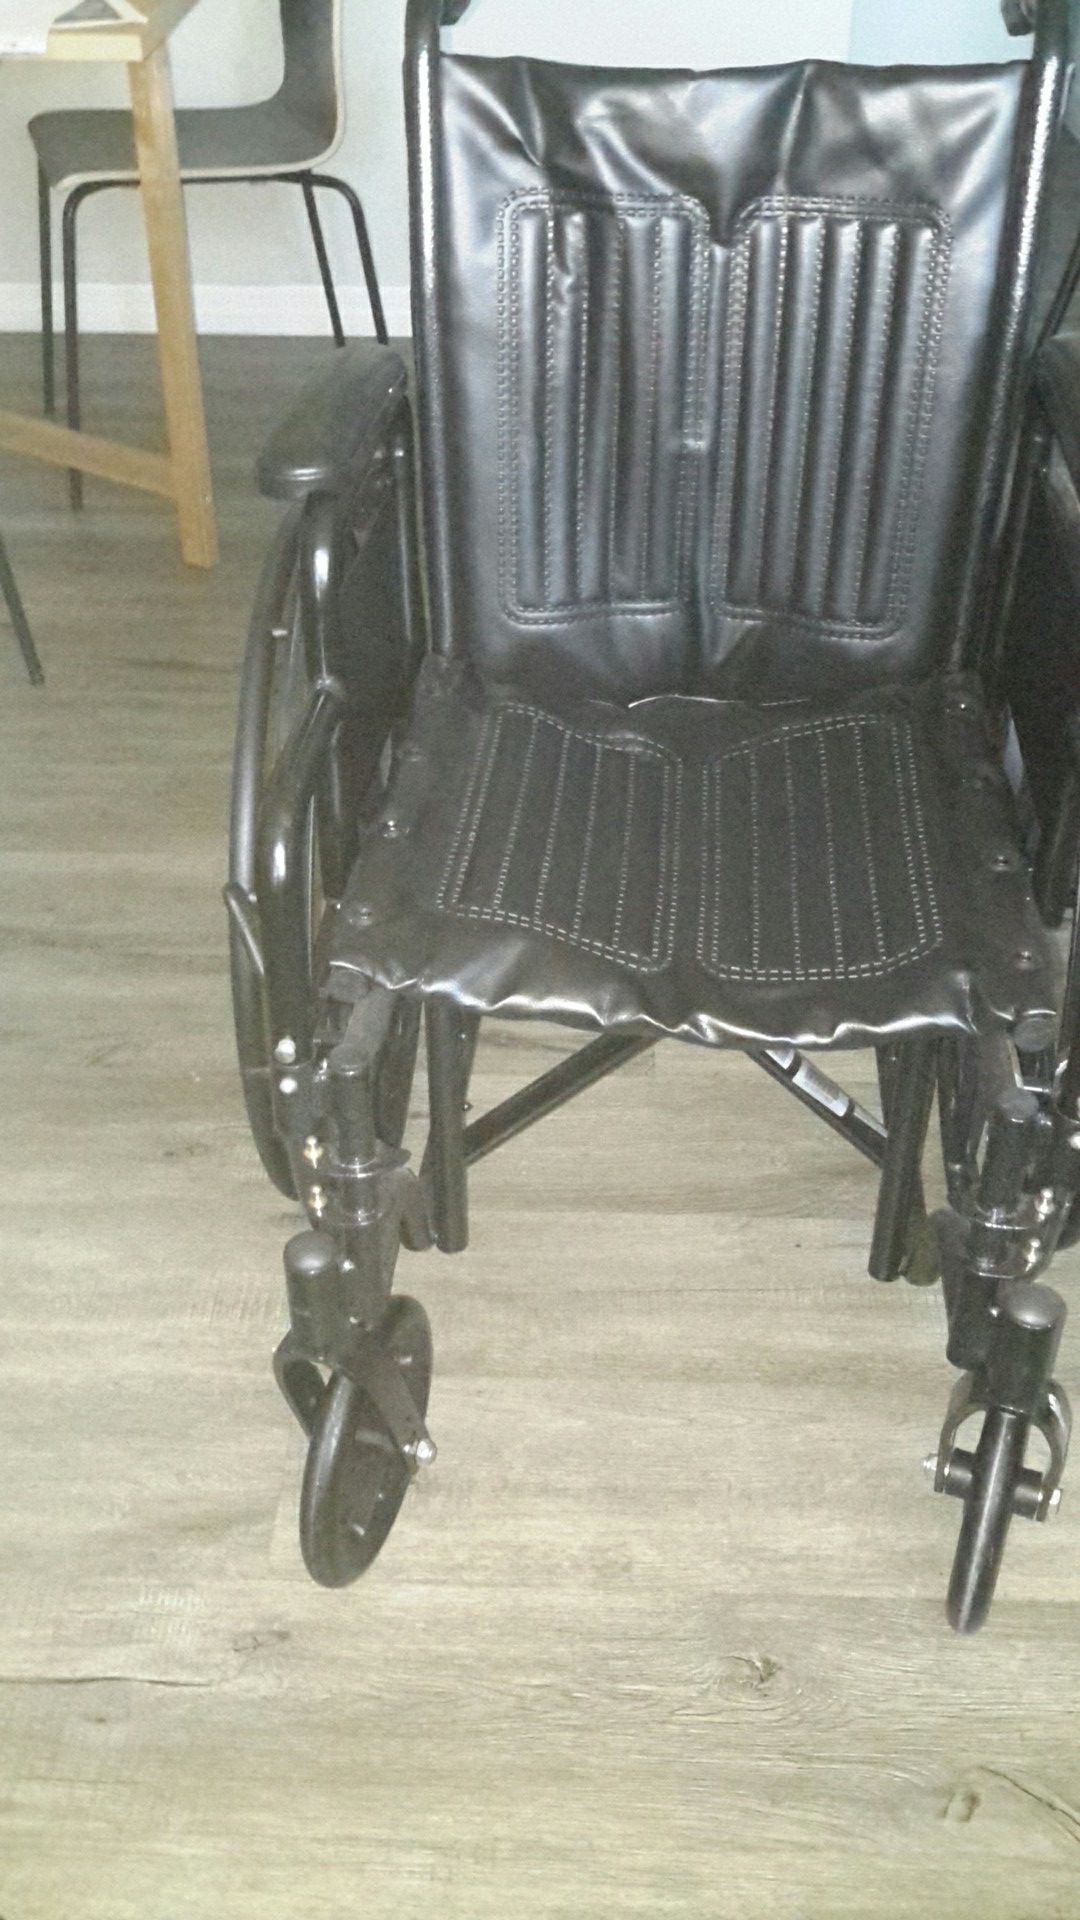 Kid wheel chair never used